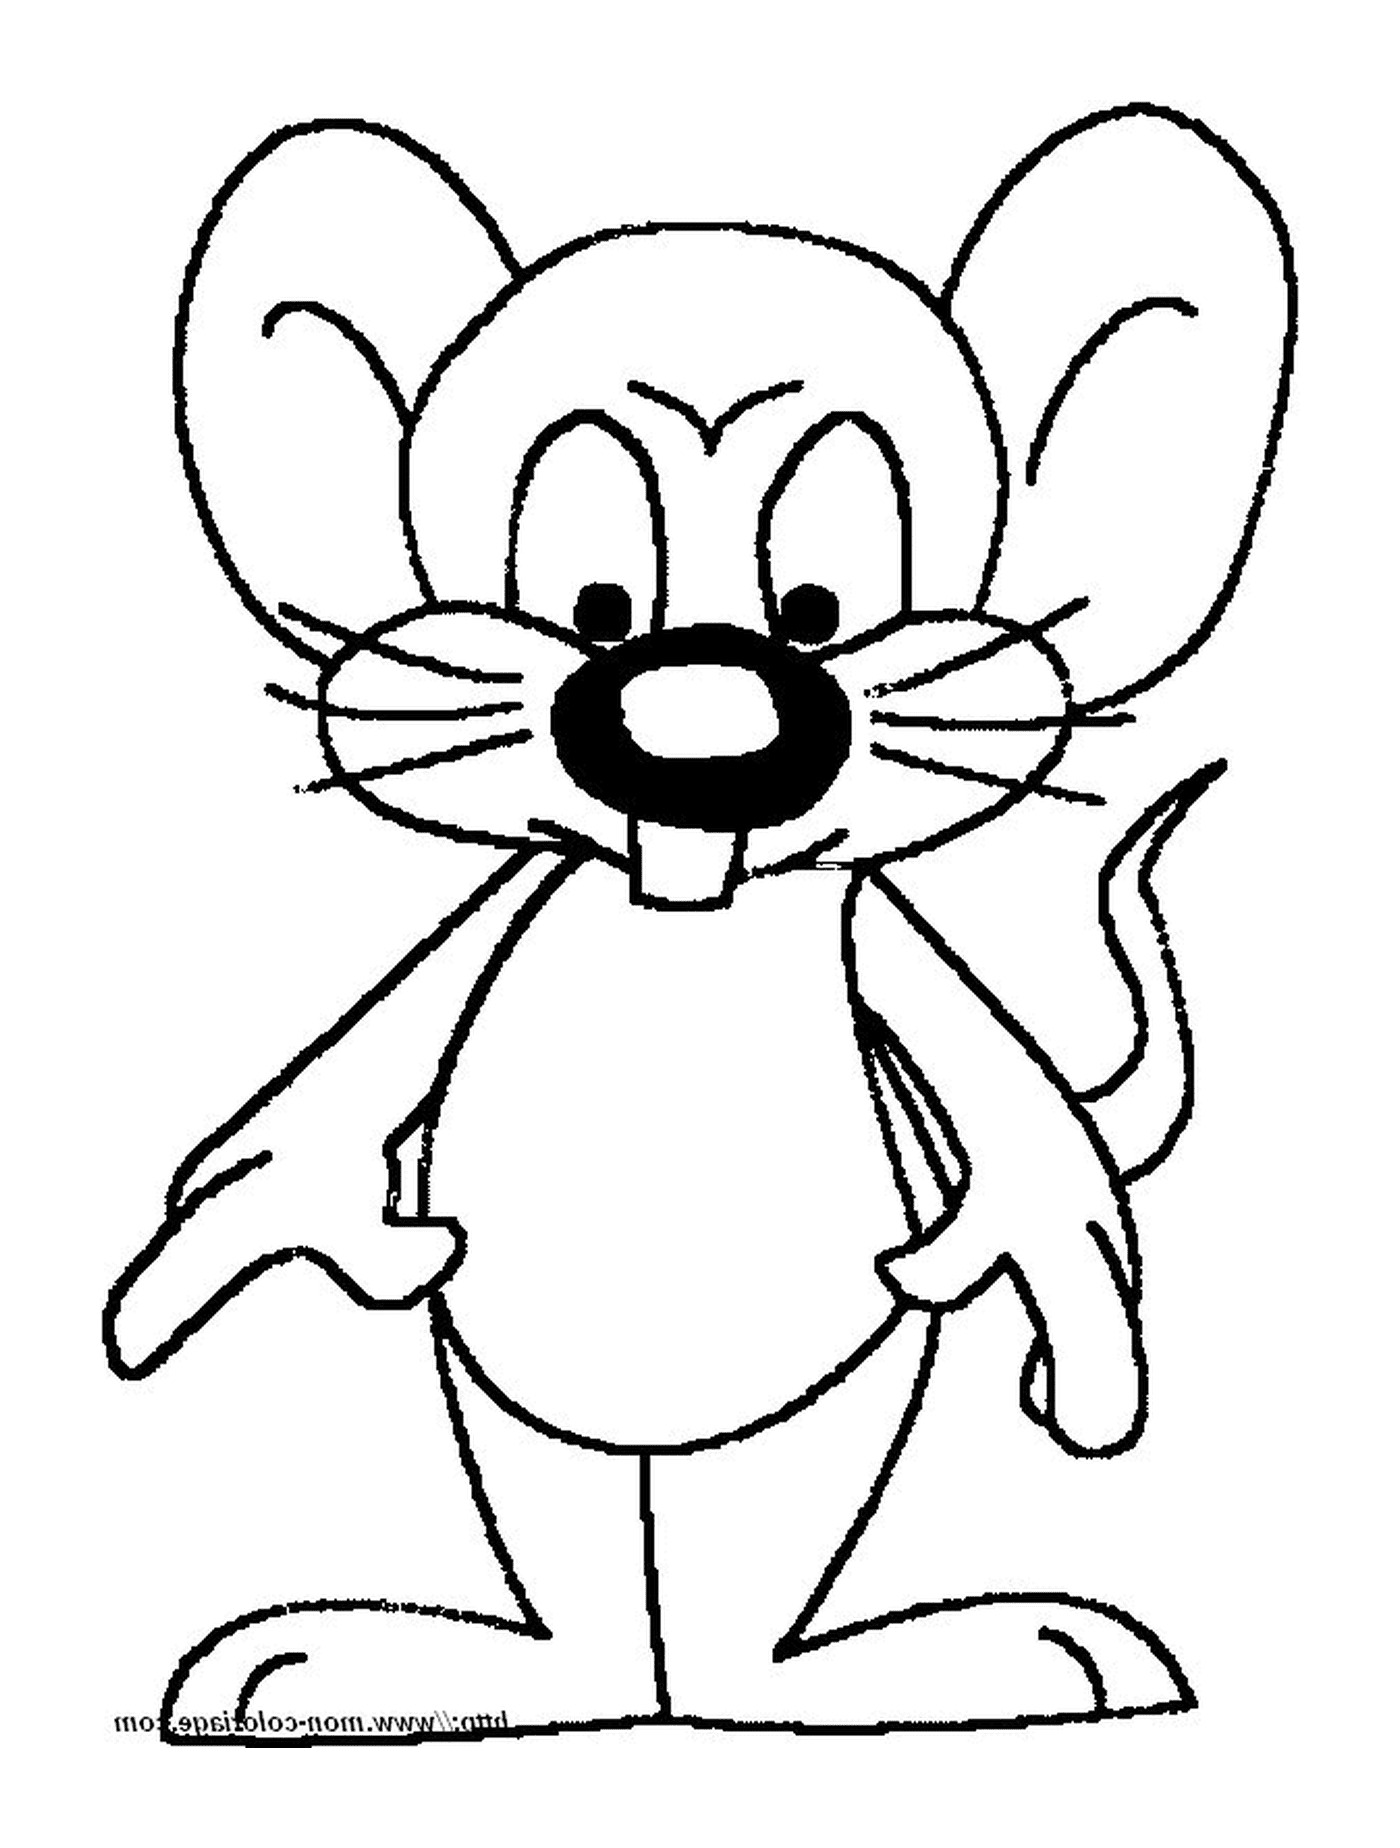  A mouse face 